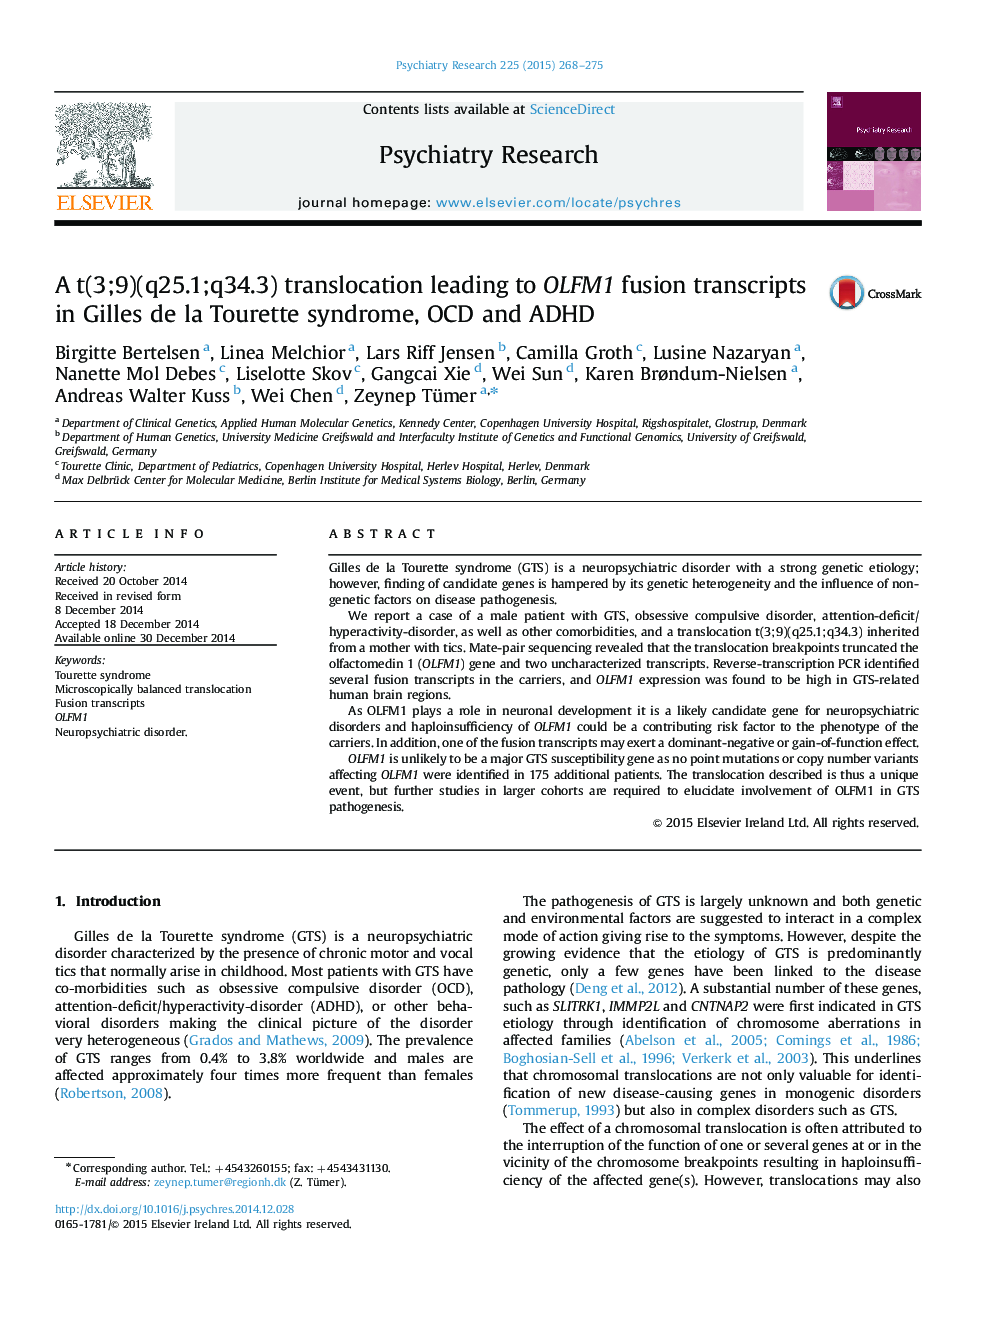 A t(3;9)(q25.1;q34.3) translocation leading to OLFM1 fusion transcripts in Gilles de la Tourette syndrome, OCD and ADHD